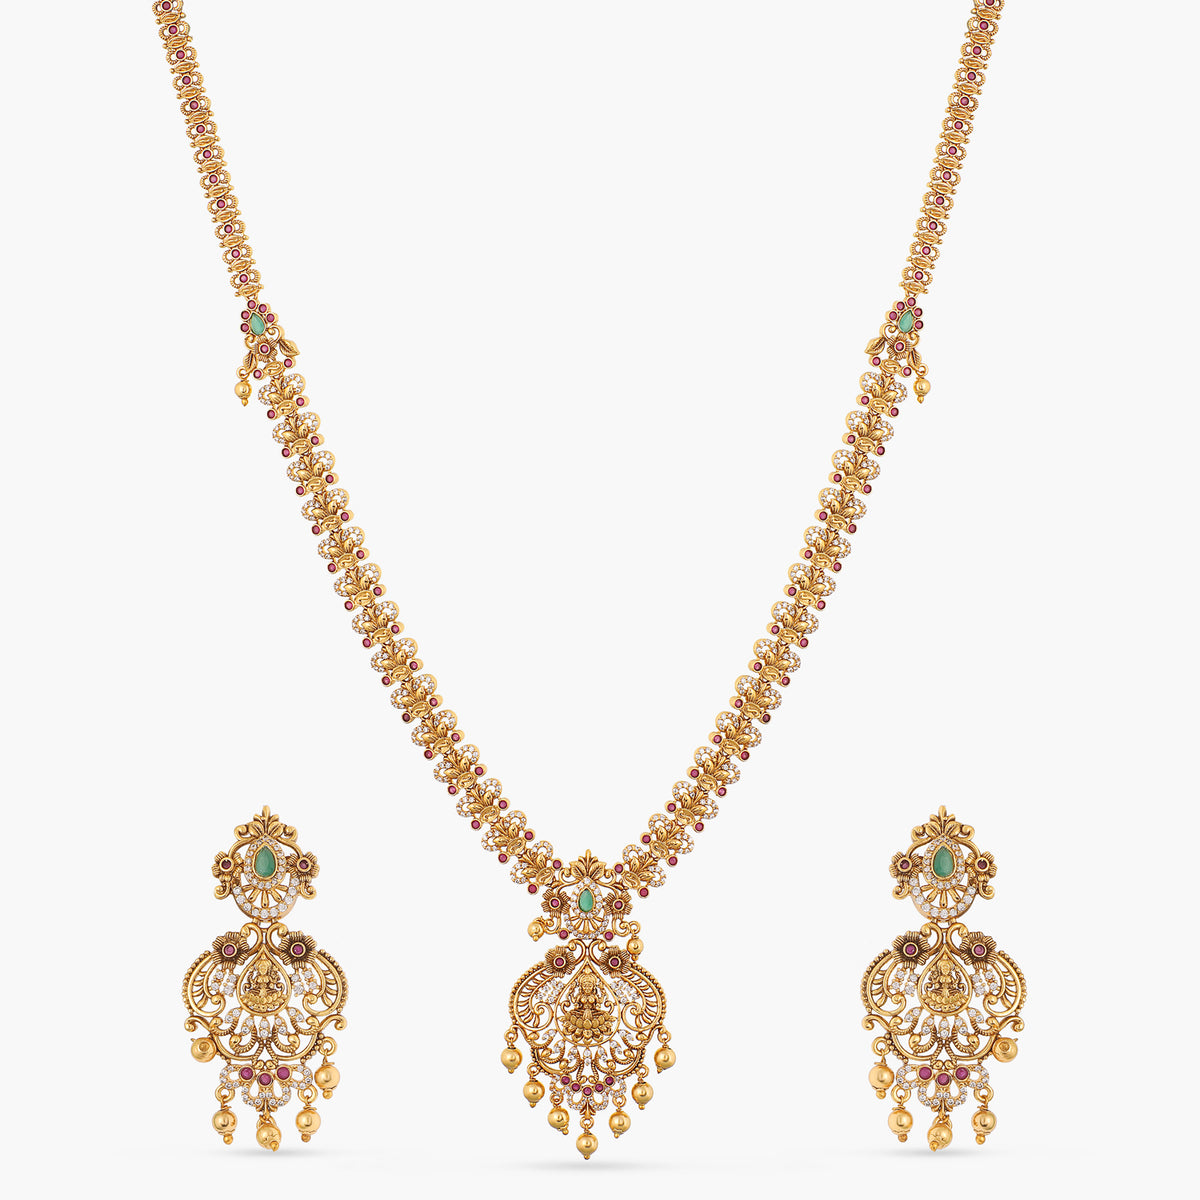 Advaya Antique Long Necklace Set